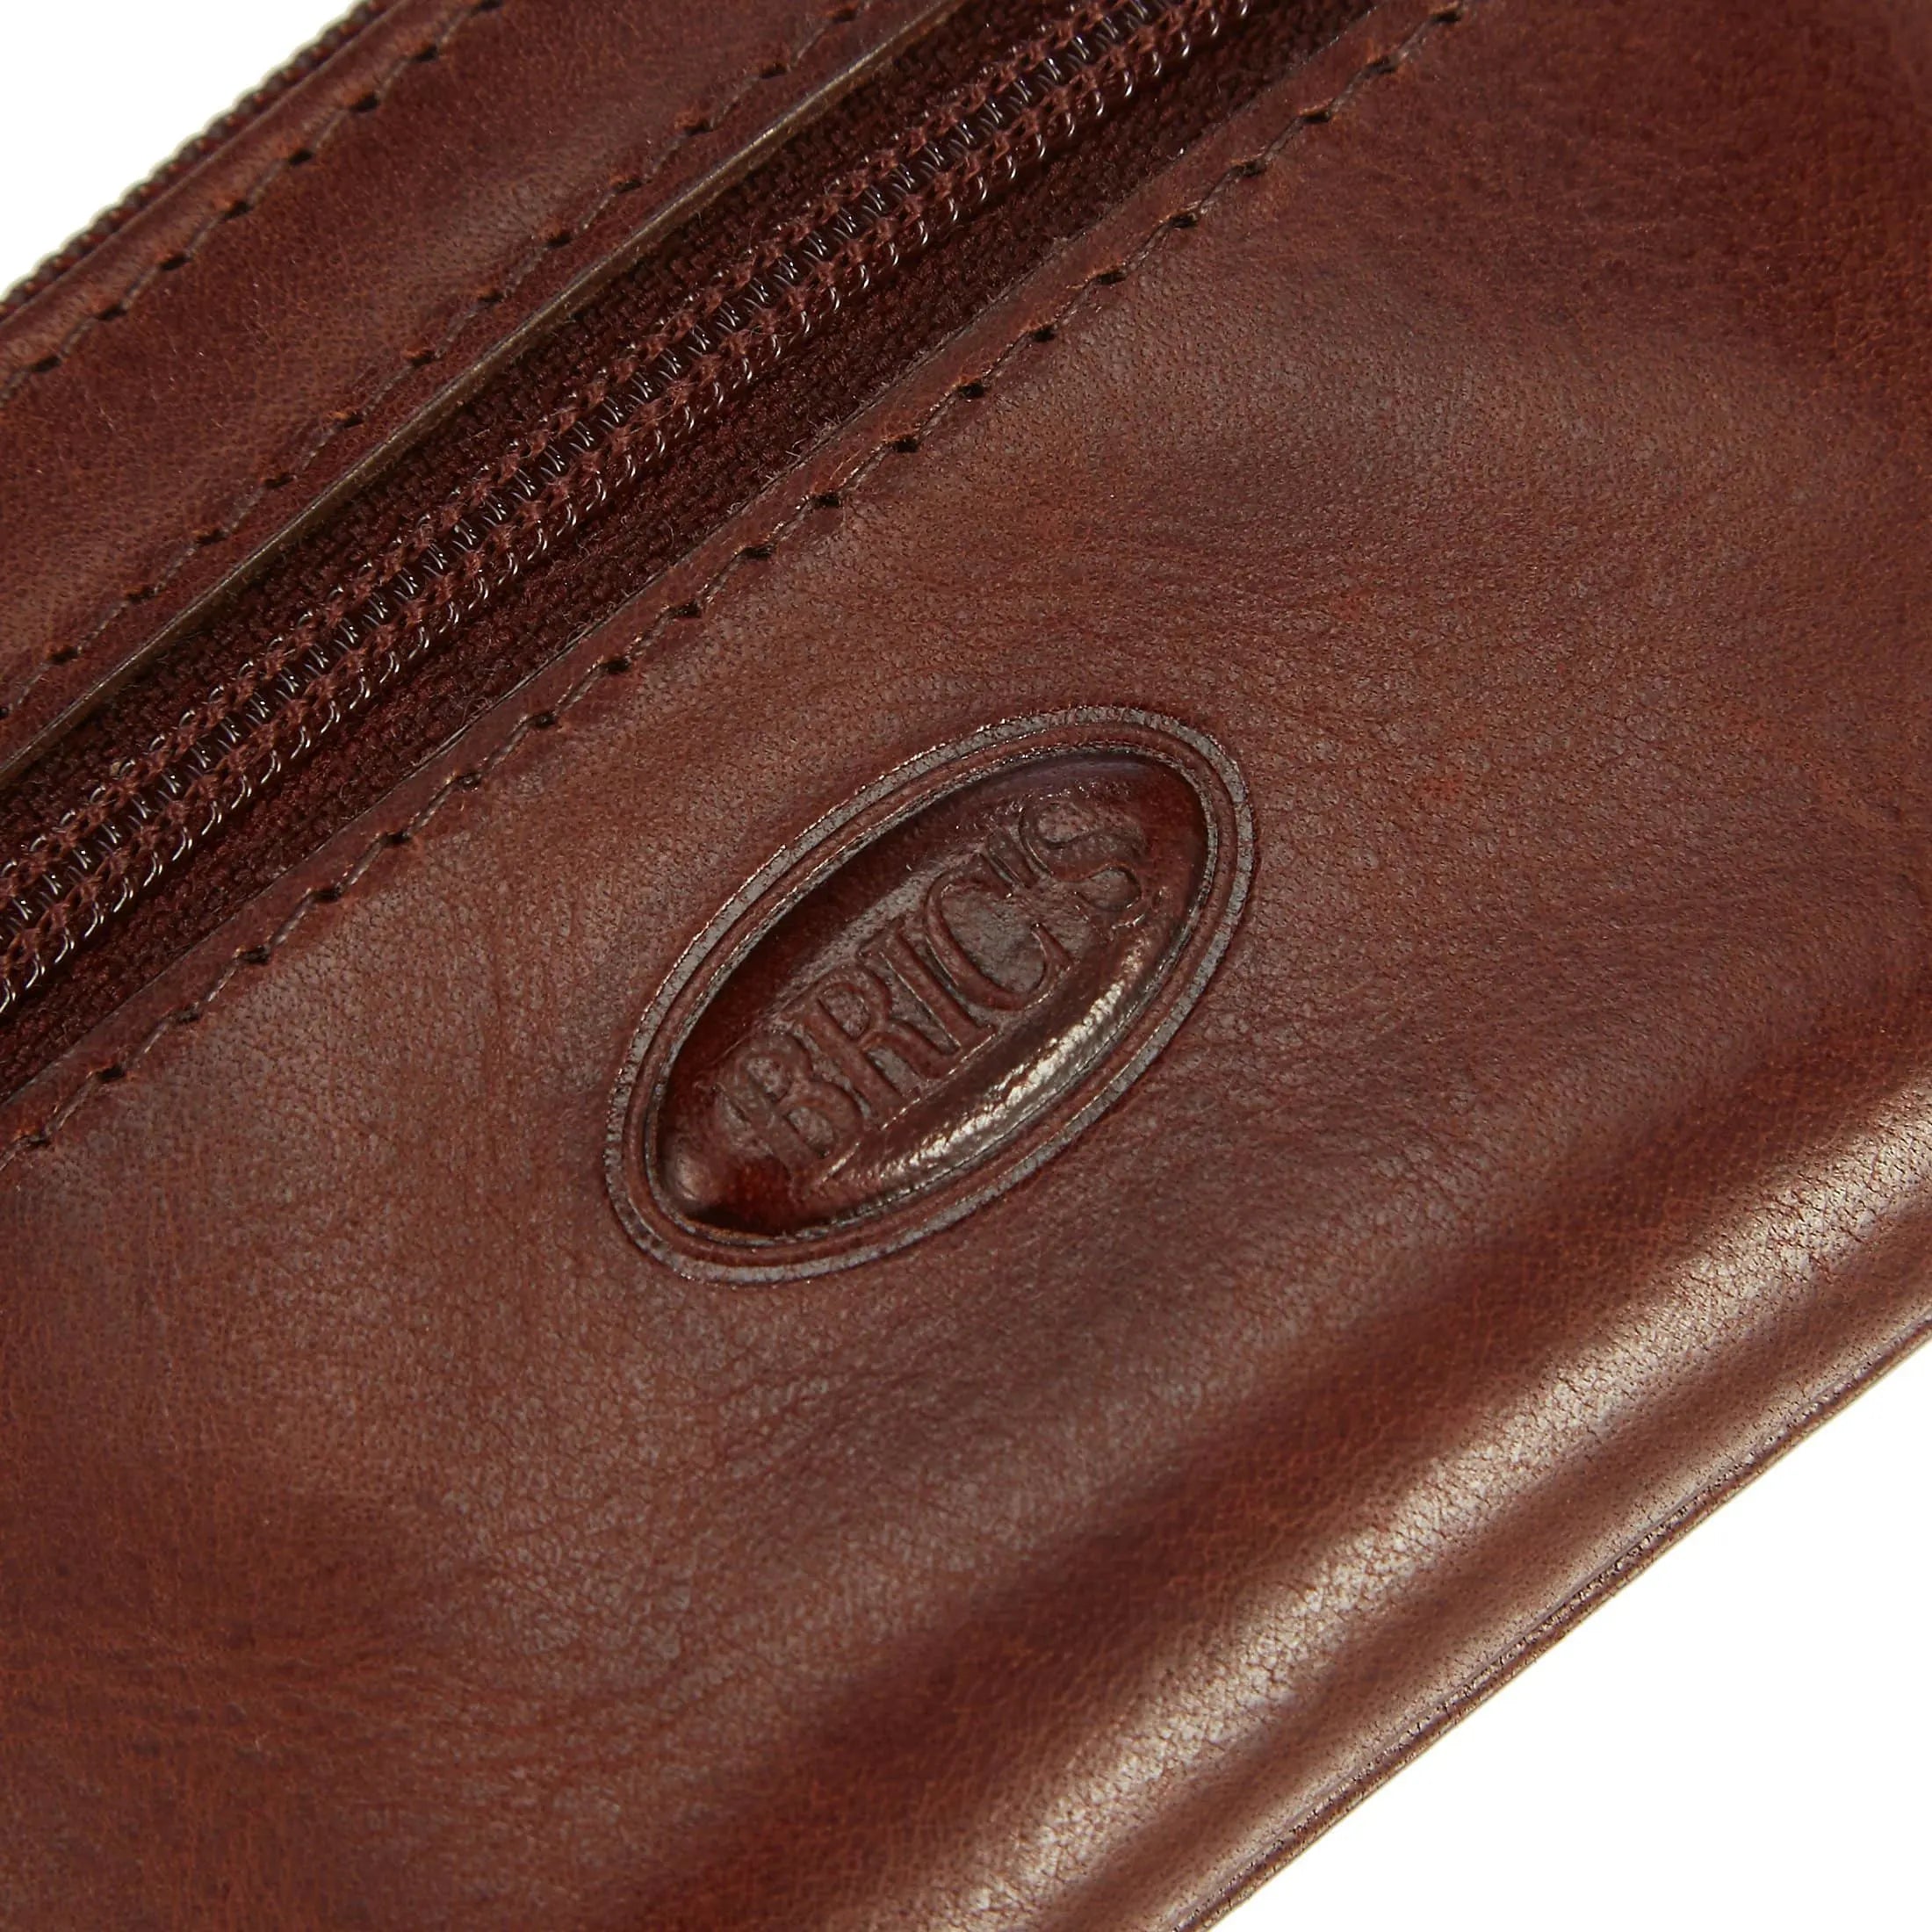 Brics Monte Rosa key case with zipper 12 cm - brown